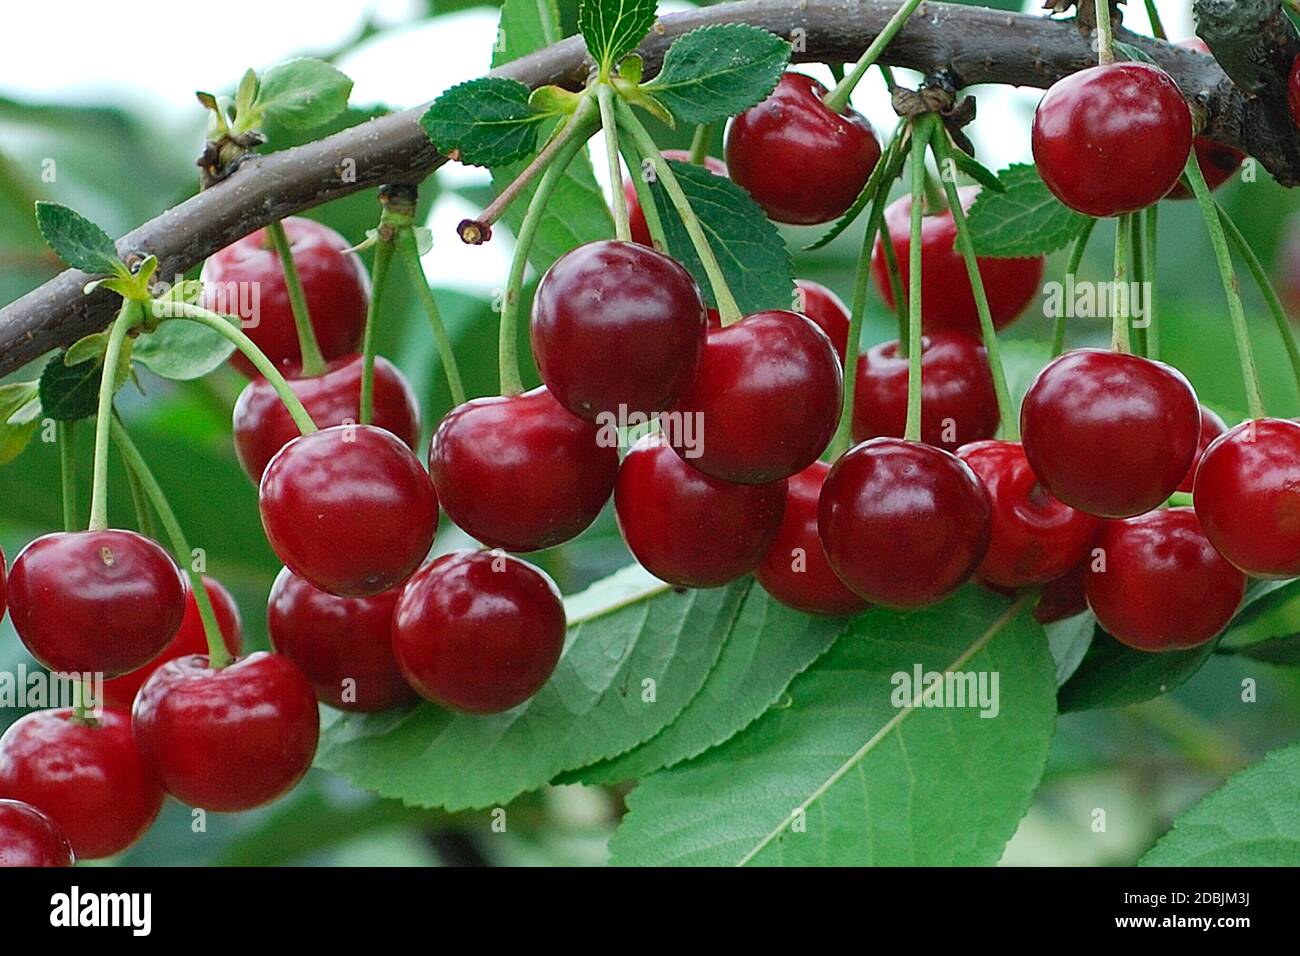 Prunus cerasus 'Scharö' Stock Photo